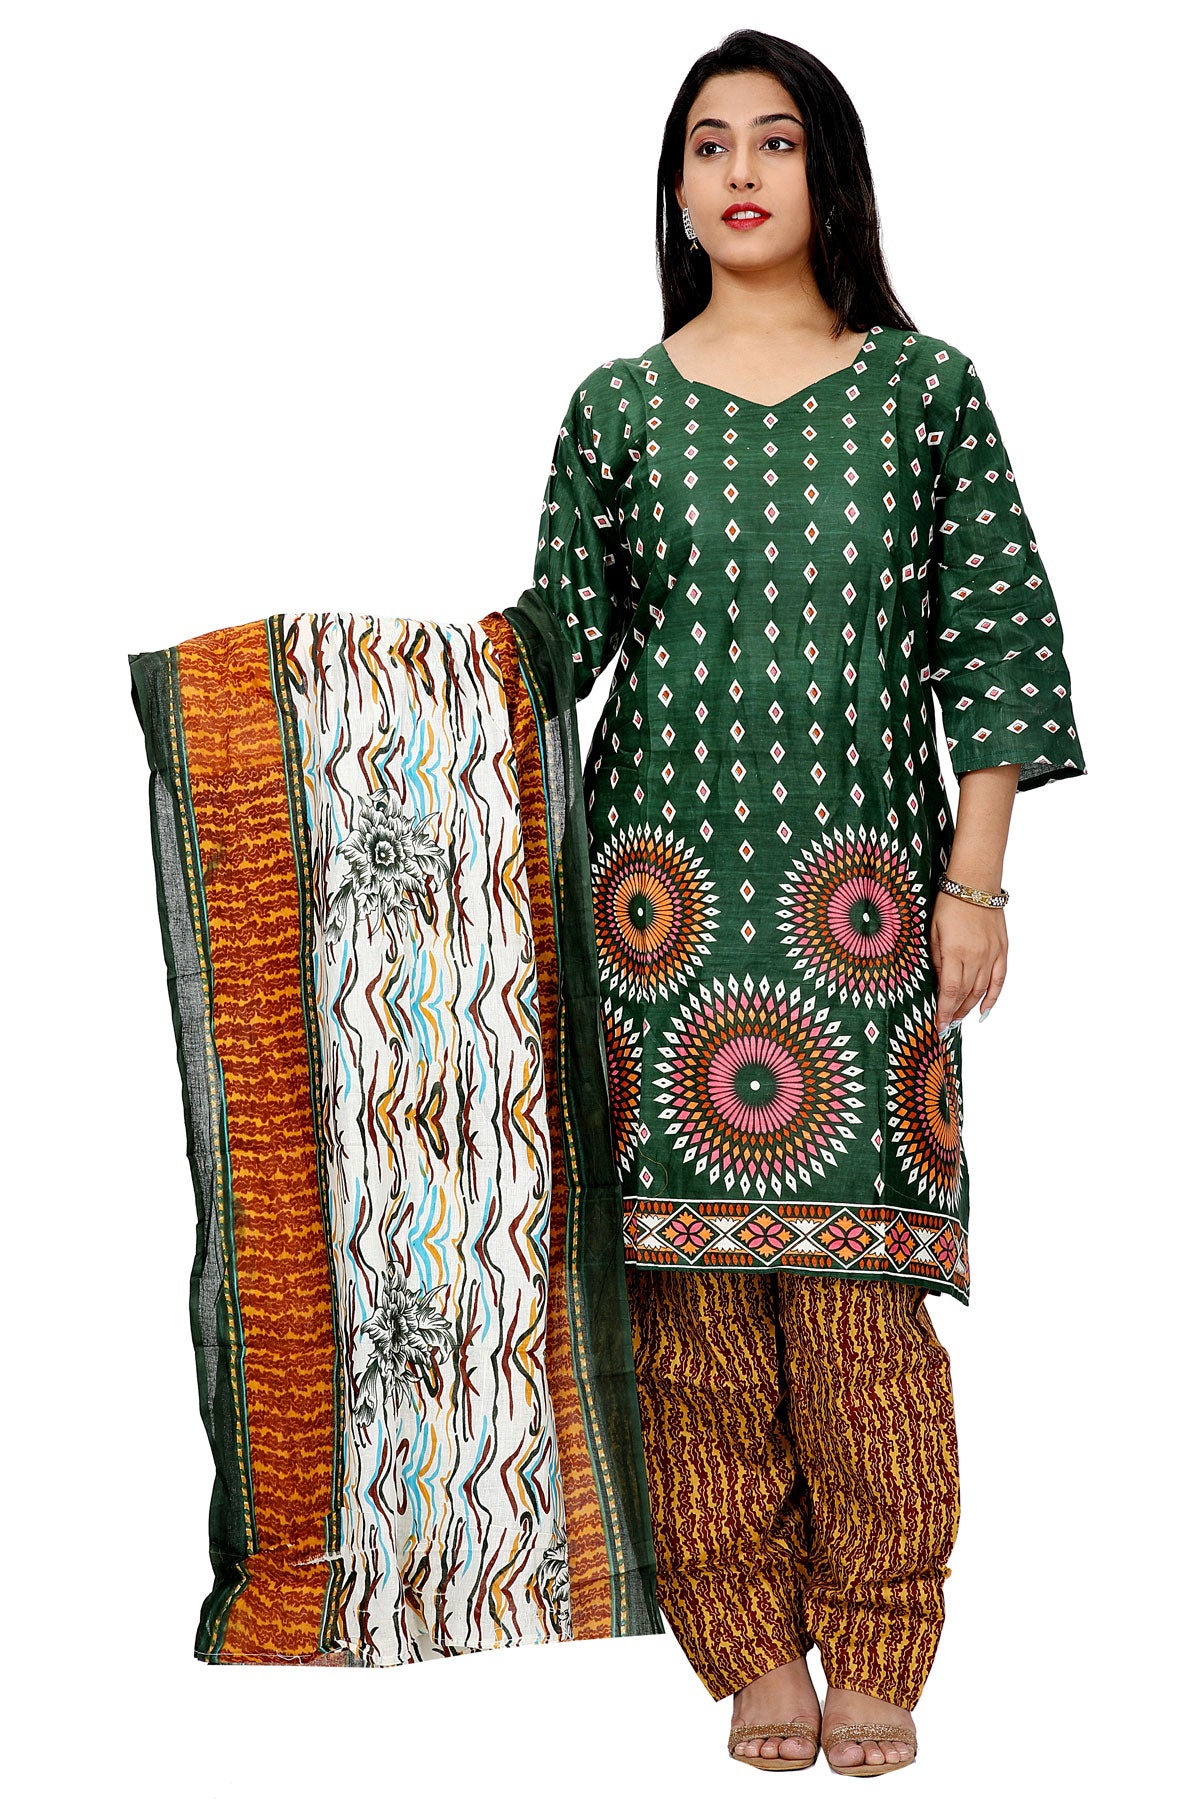 Green Printed  Cotton Salwar kameez Dress Plus  chest Size 52